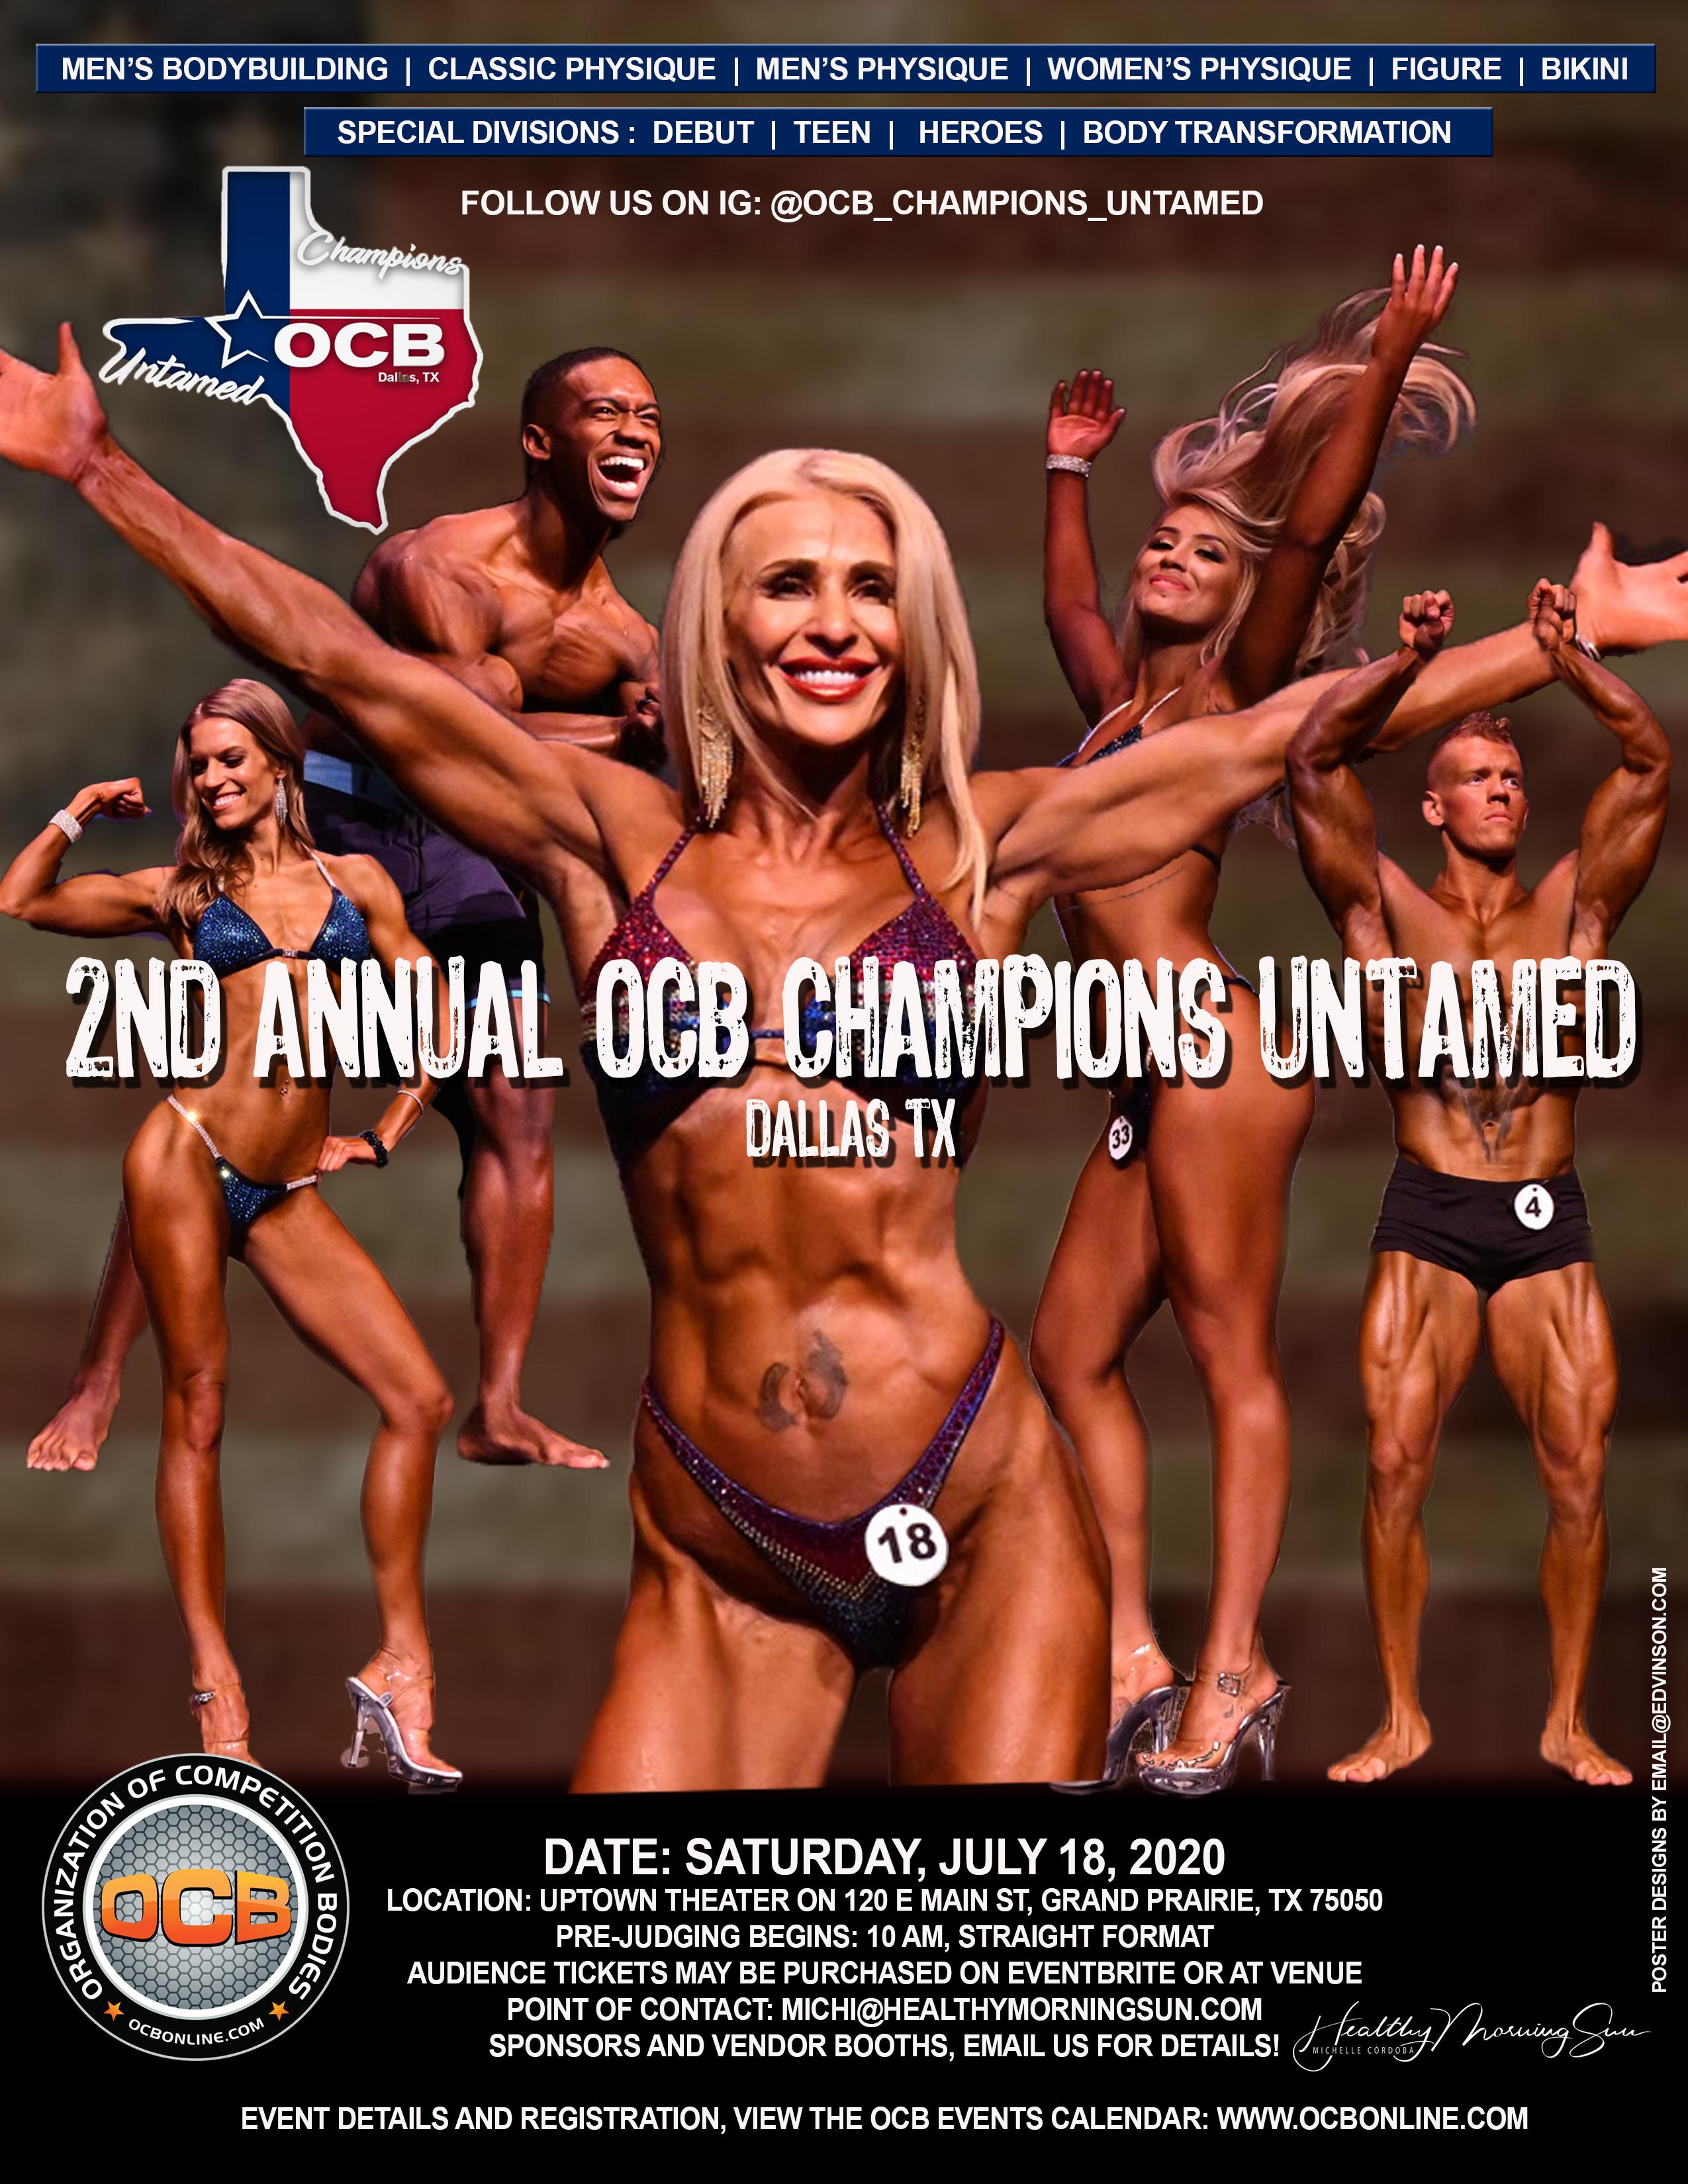 OCB Champions Untamed: 2nd Annual 2020